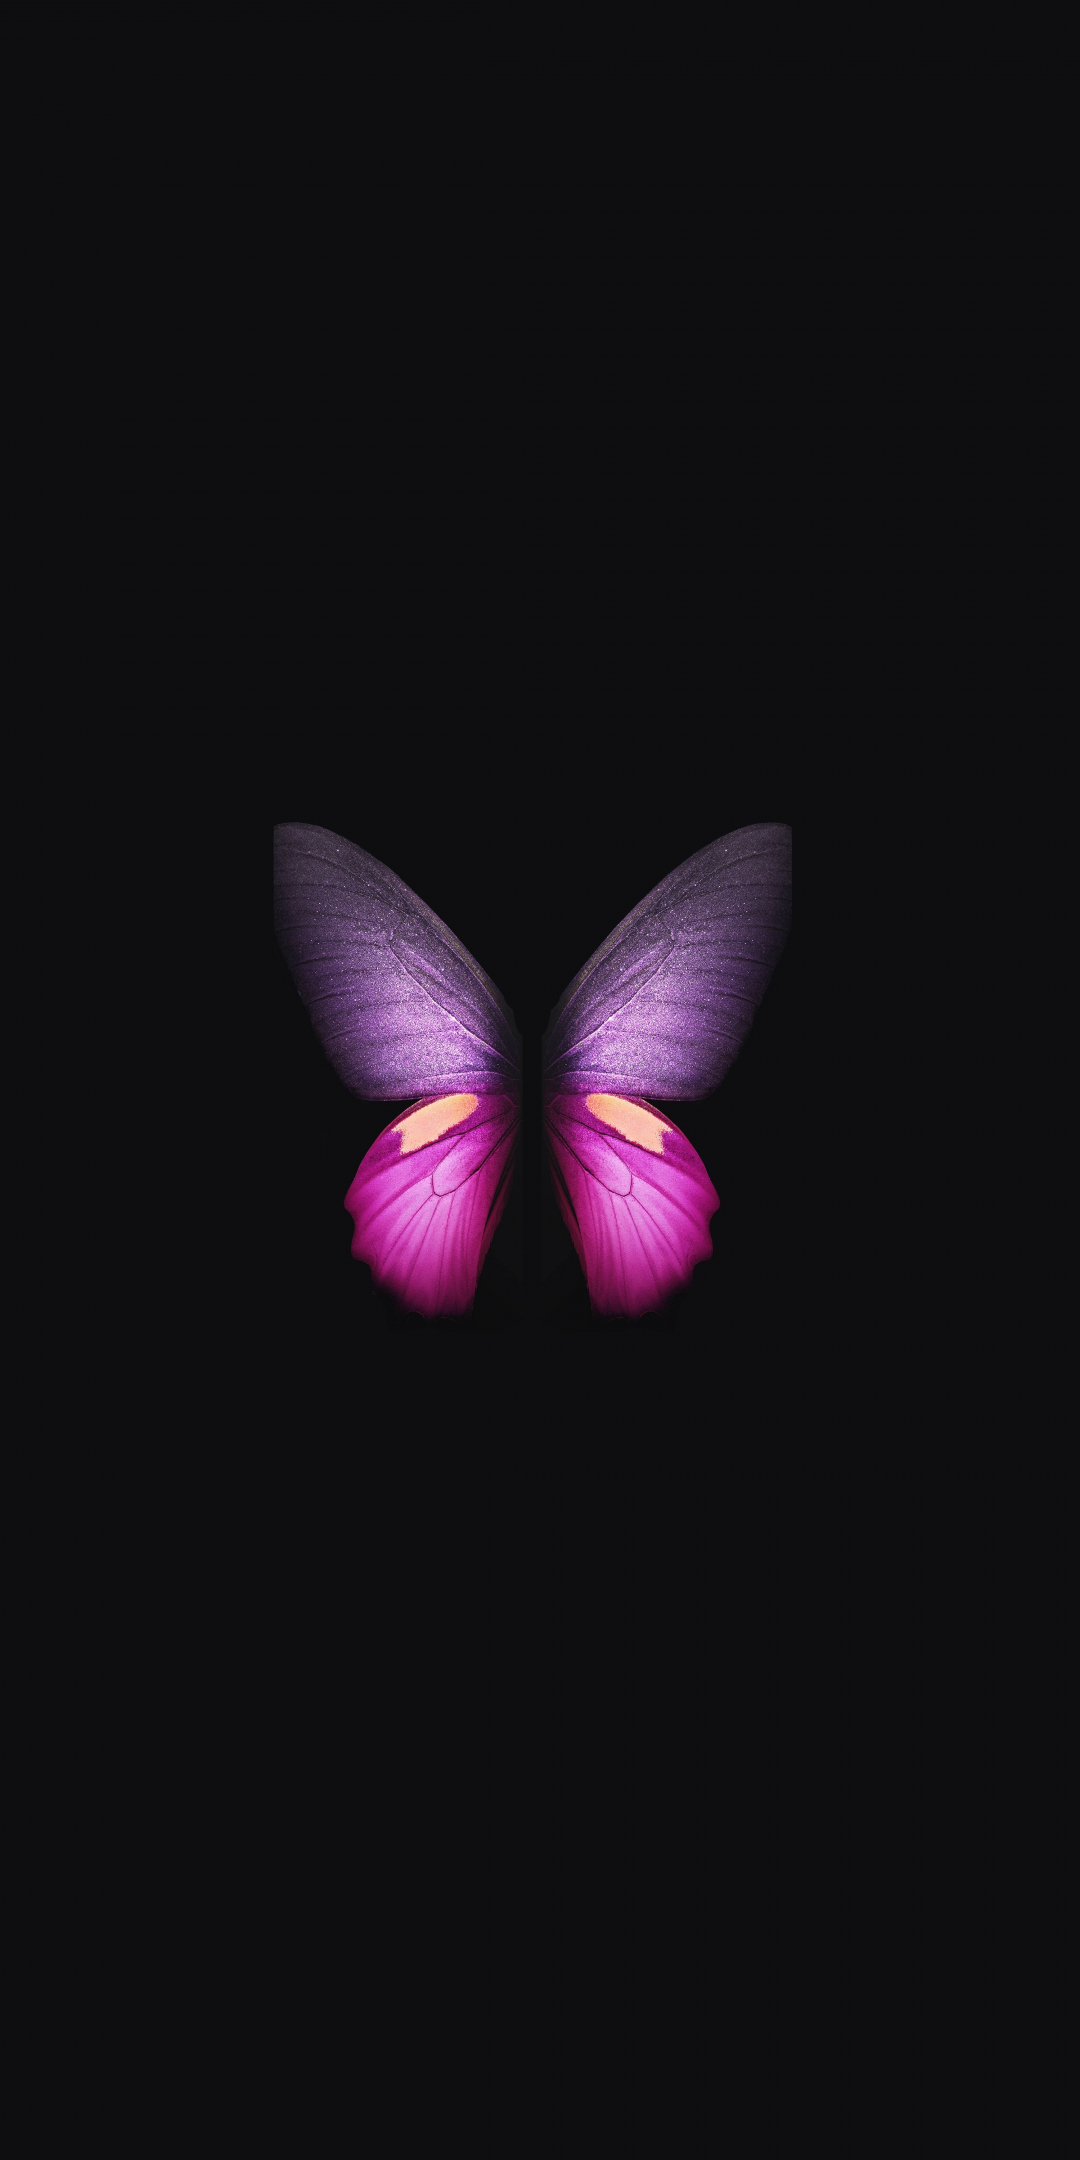 Download wallpaper 1080x2160 samsung galaxy fold, pink-purple butterfly ...